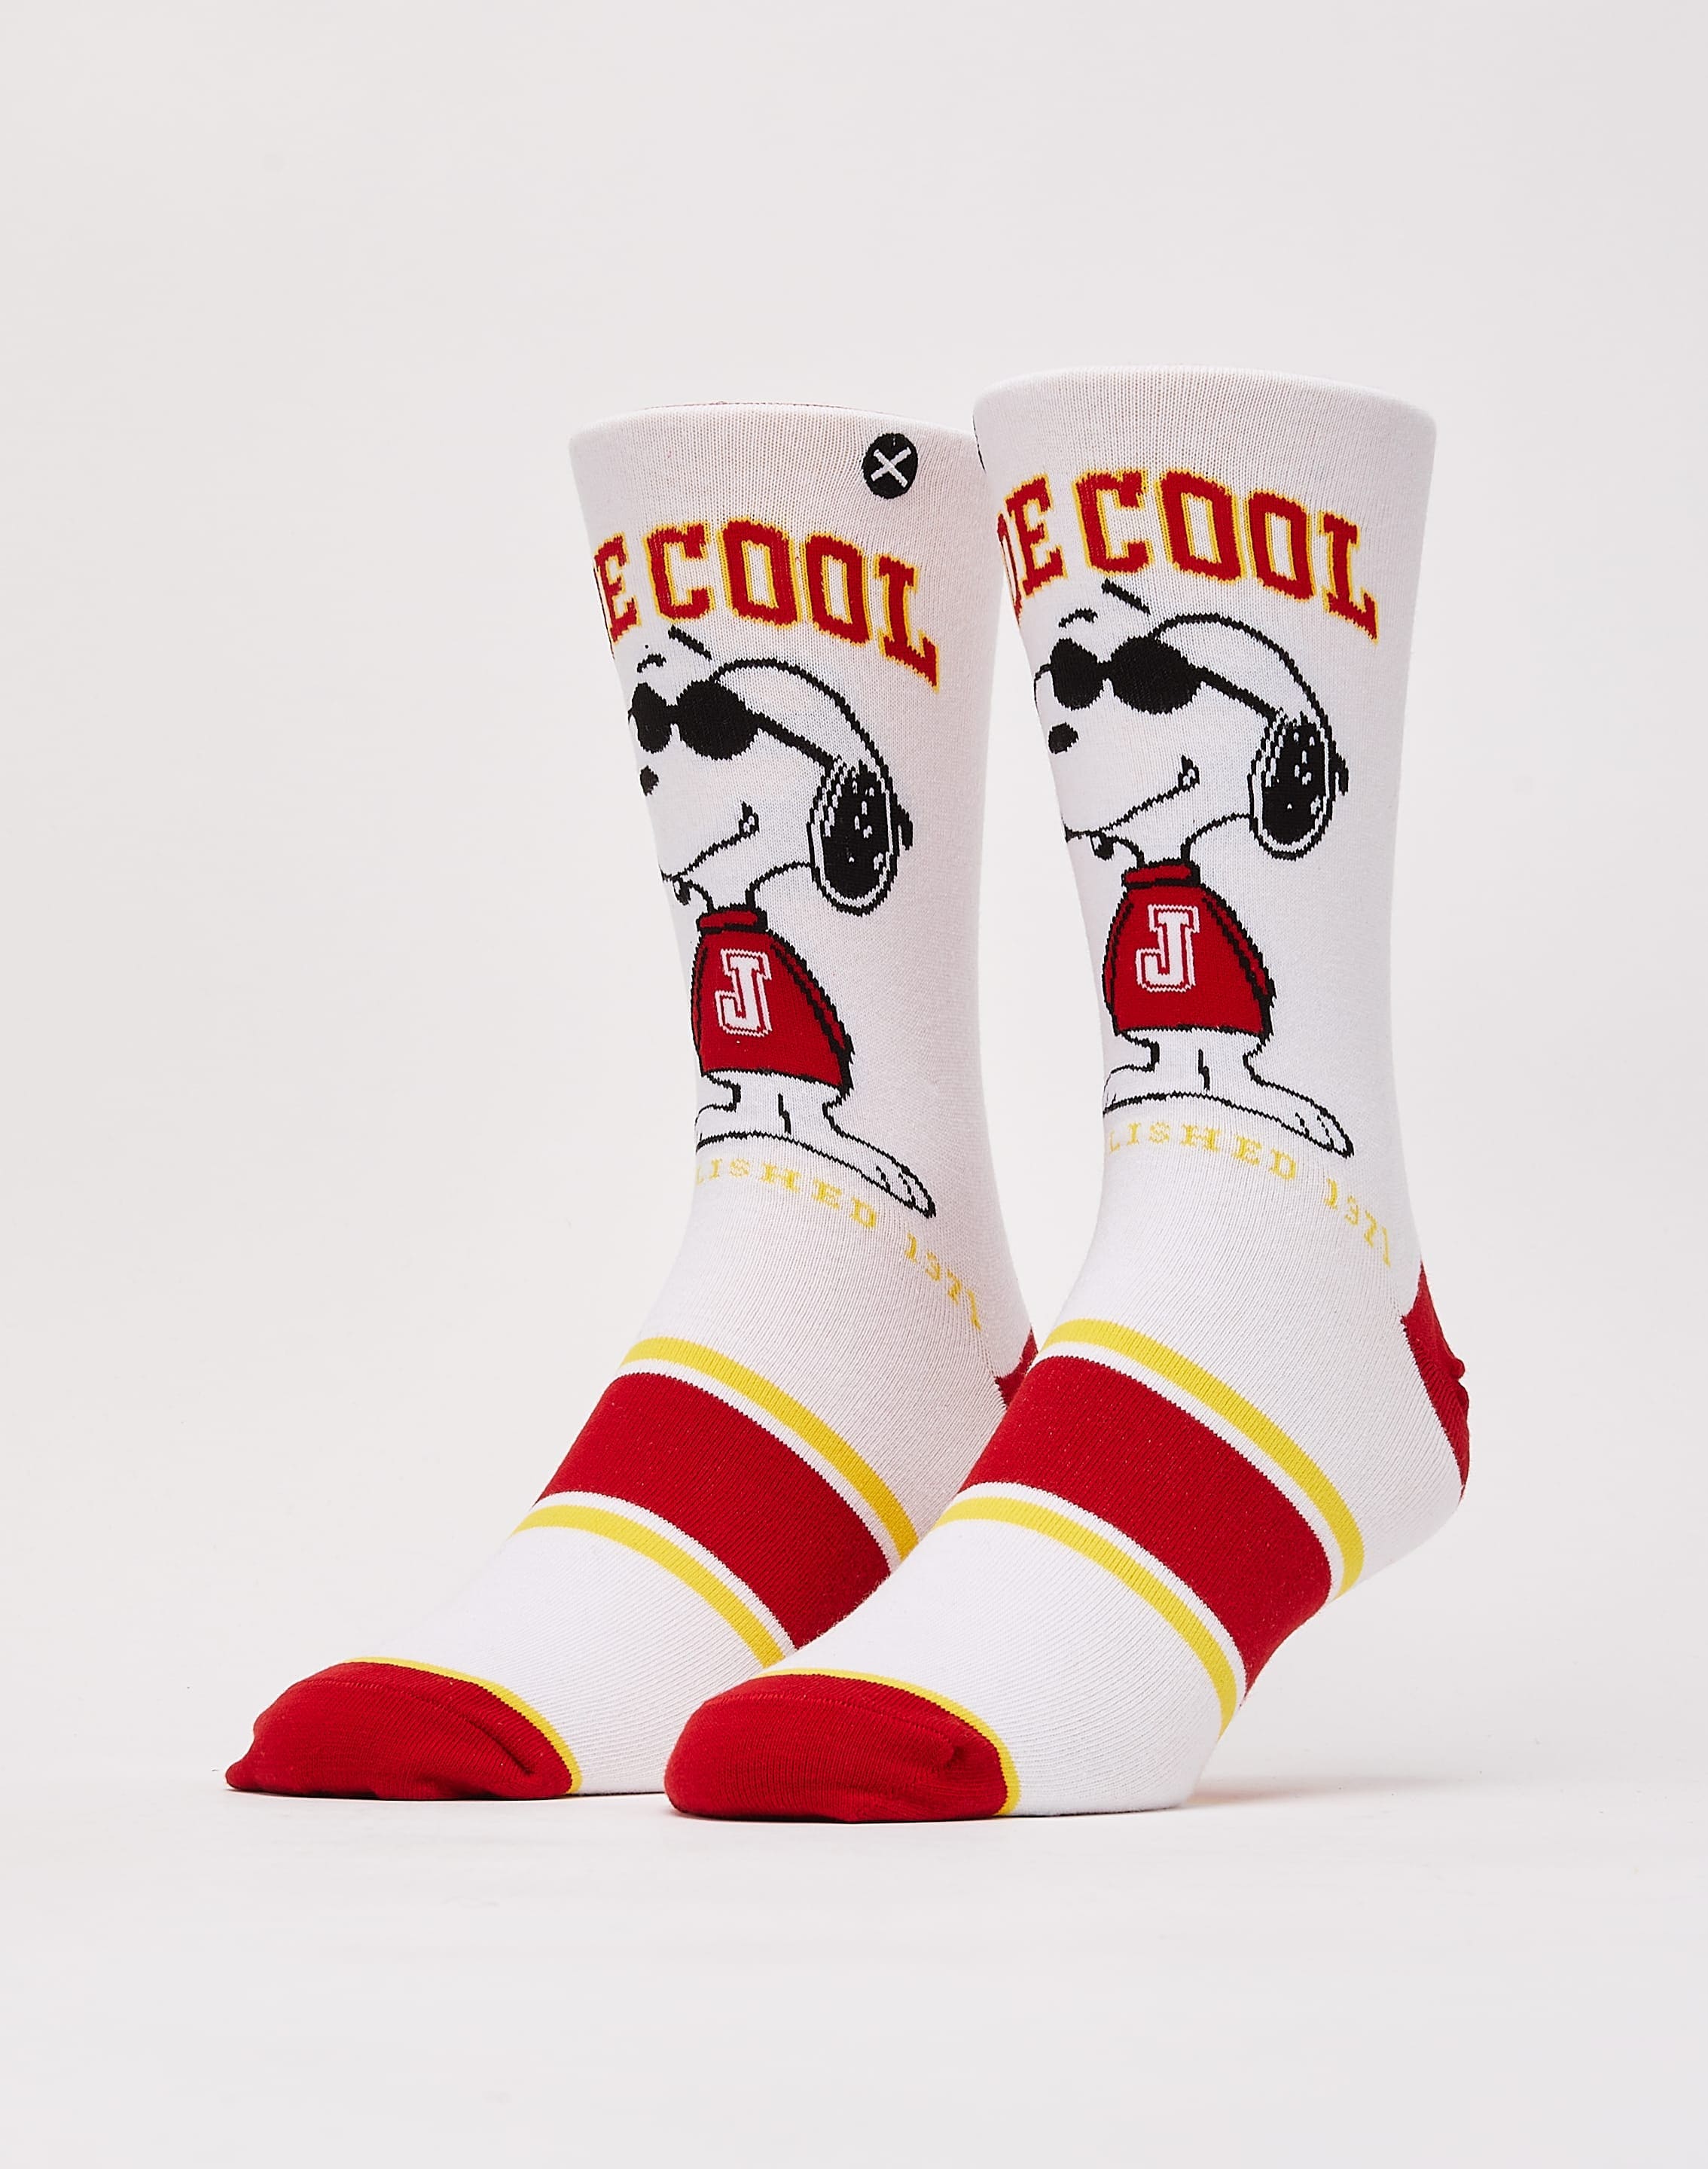 Odd Sox Joe Cool Crew Socks